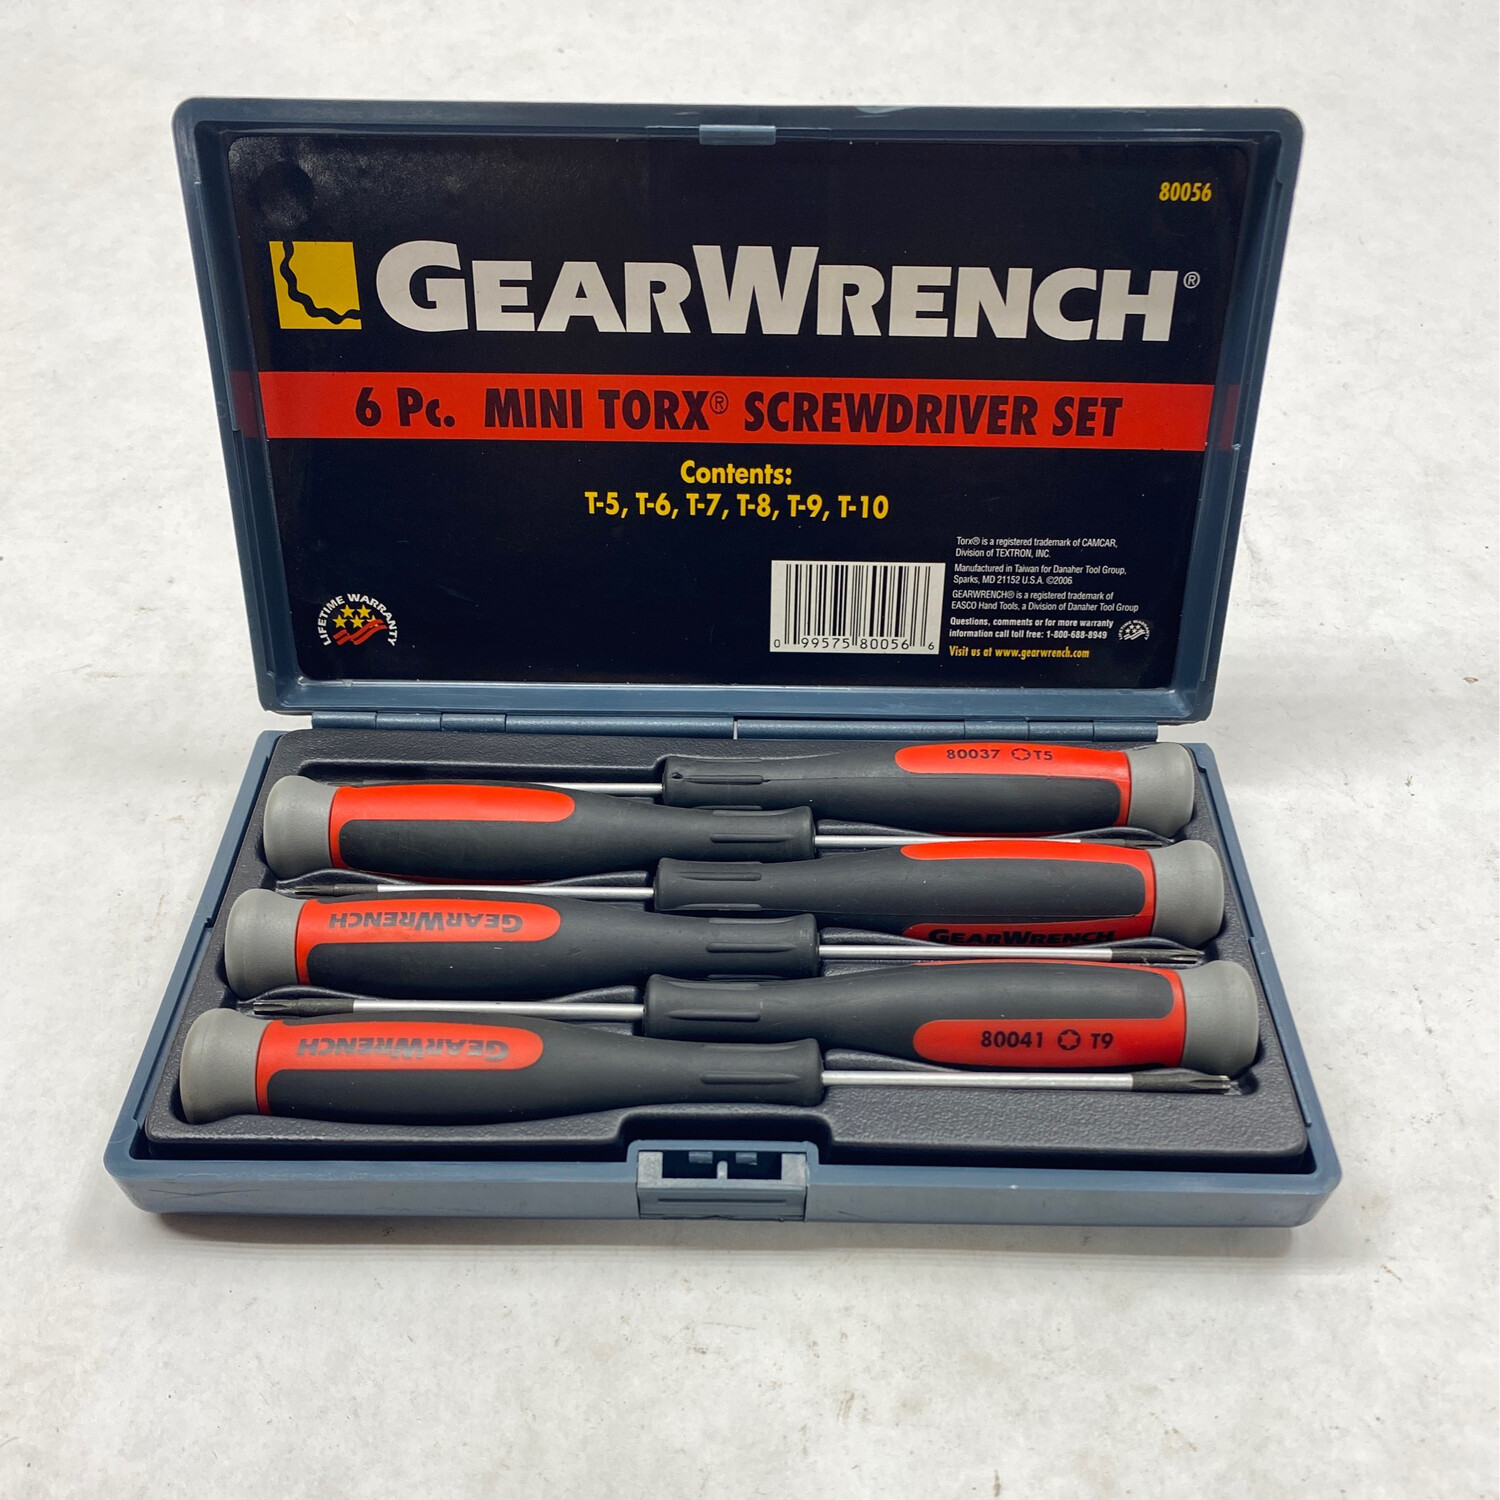 GearWrench 6pc. Mini Torx Screwdriver Set, 80056 - Shop - Tool Swapper